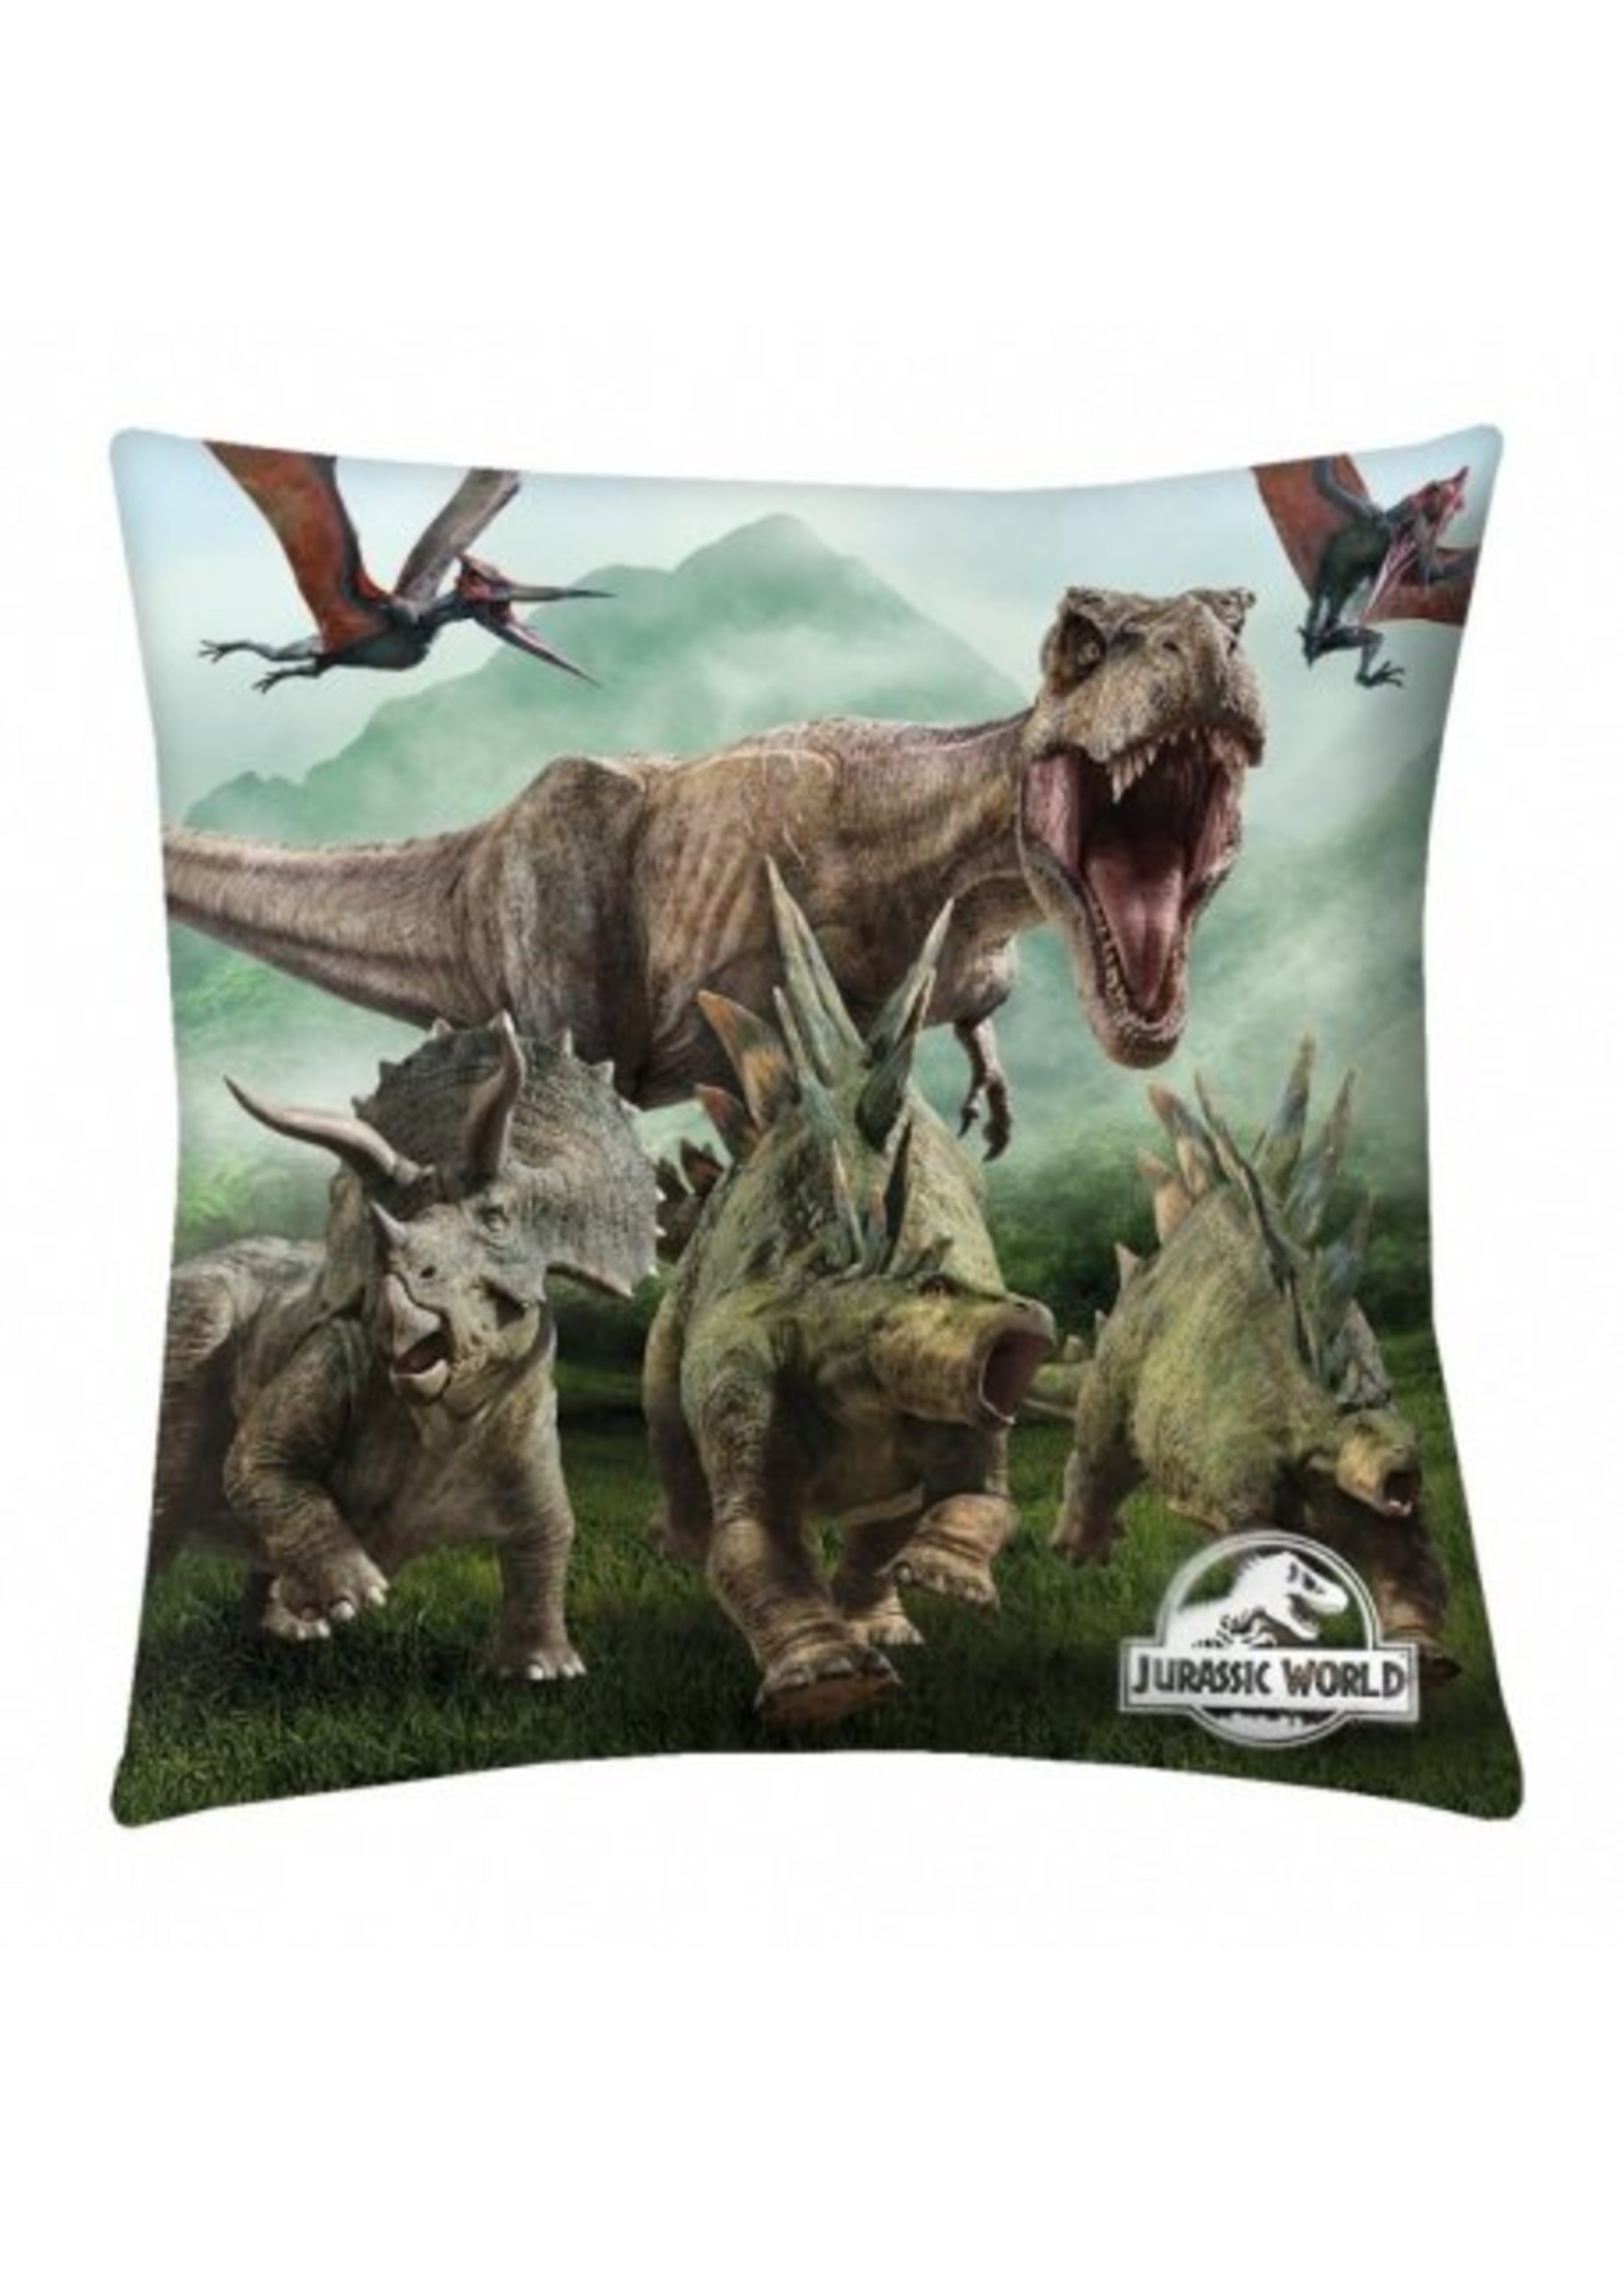 Jurassic World Dinosaur Cushion